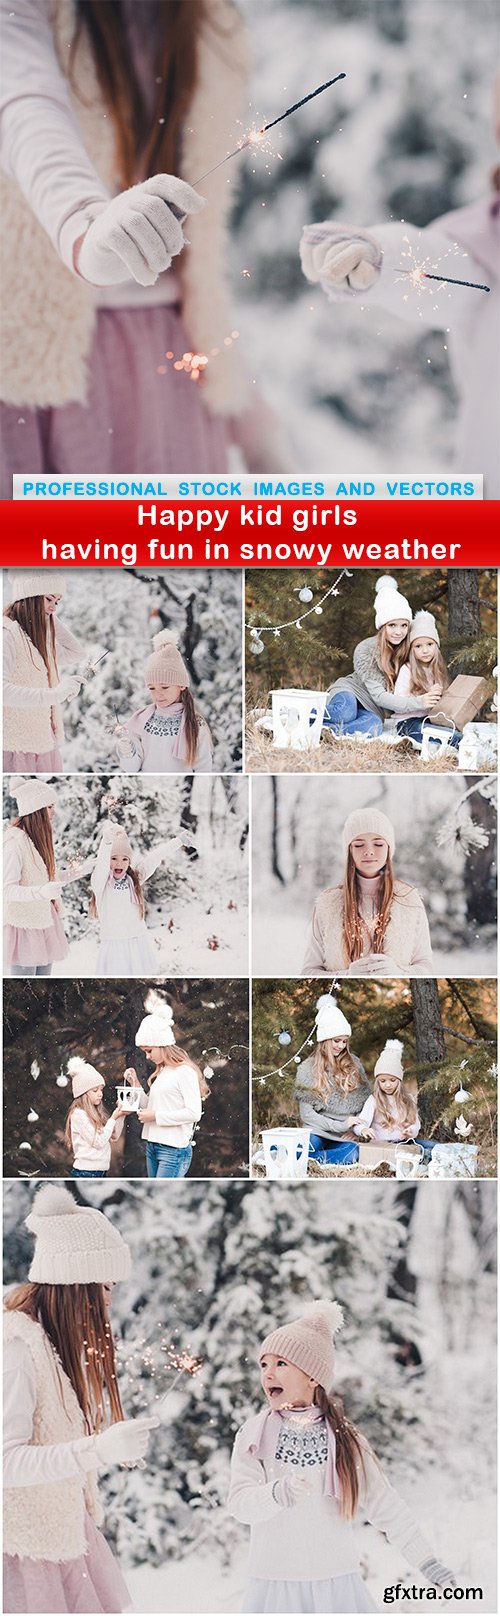 Happy kid girls having fun in snowy weather - 8 UHQ JPEG